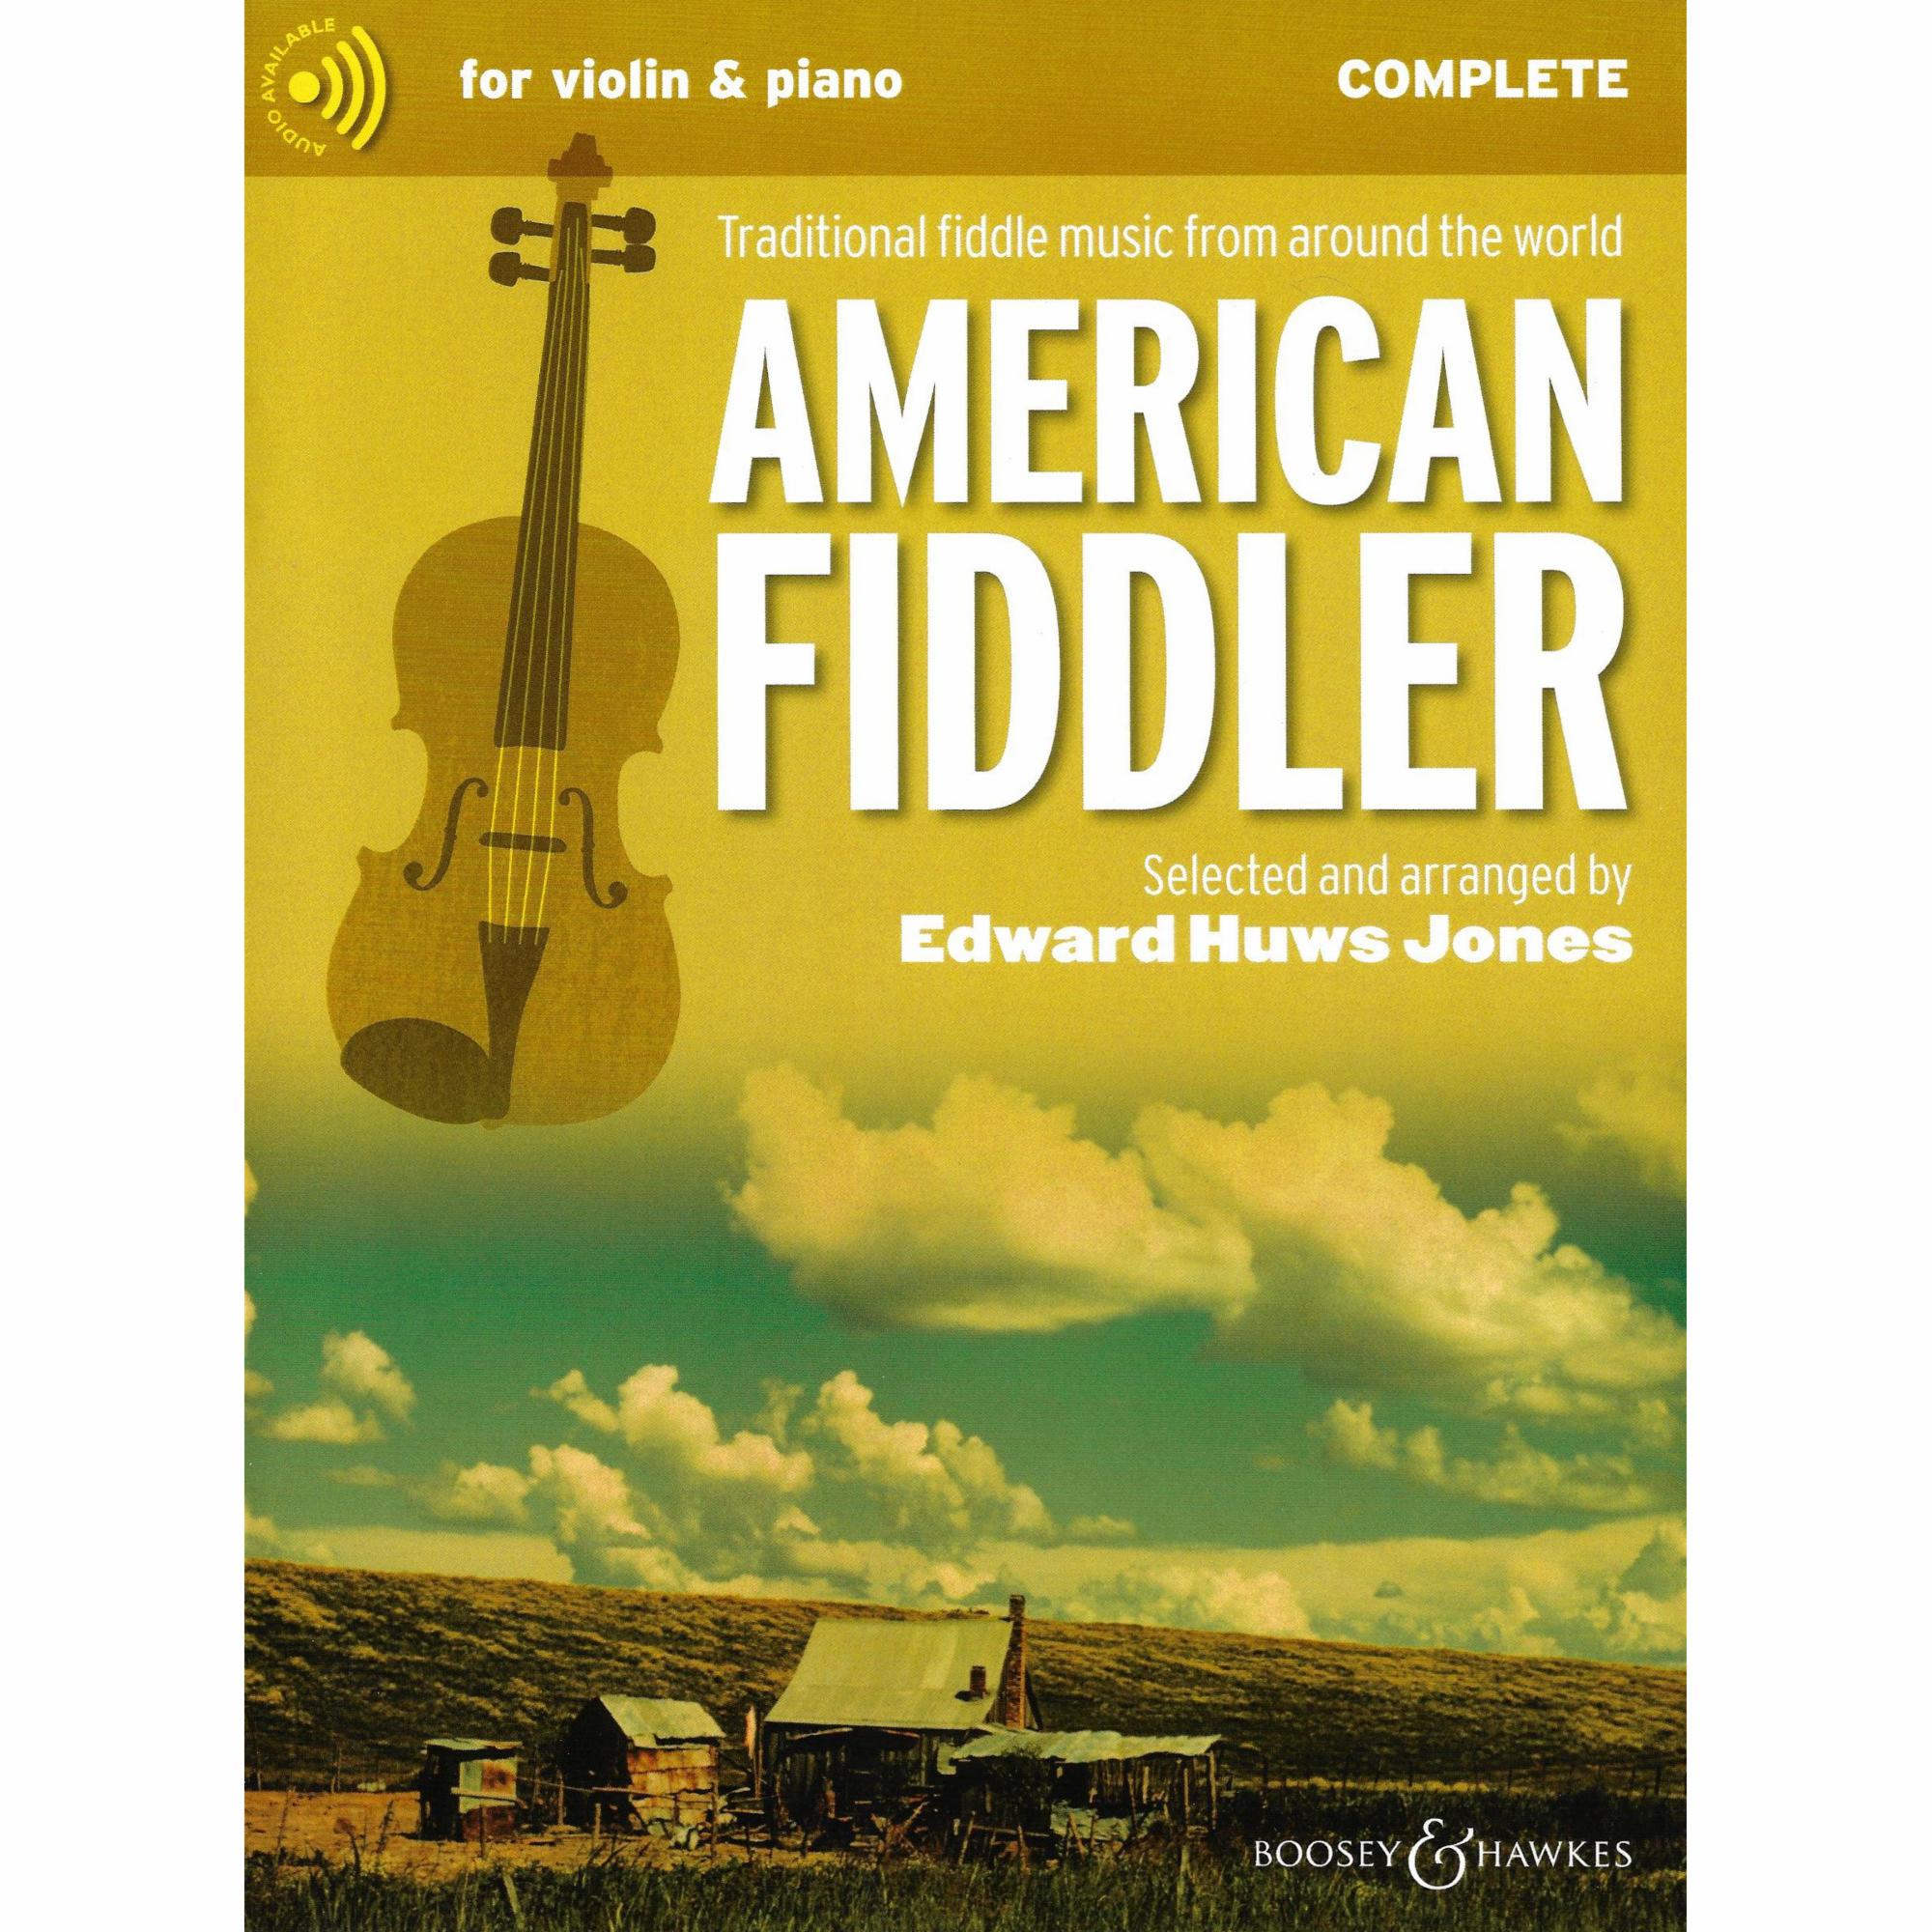 American Fiddler